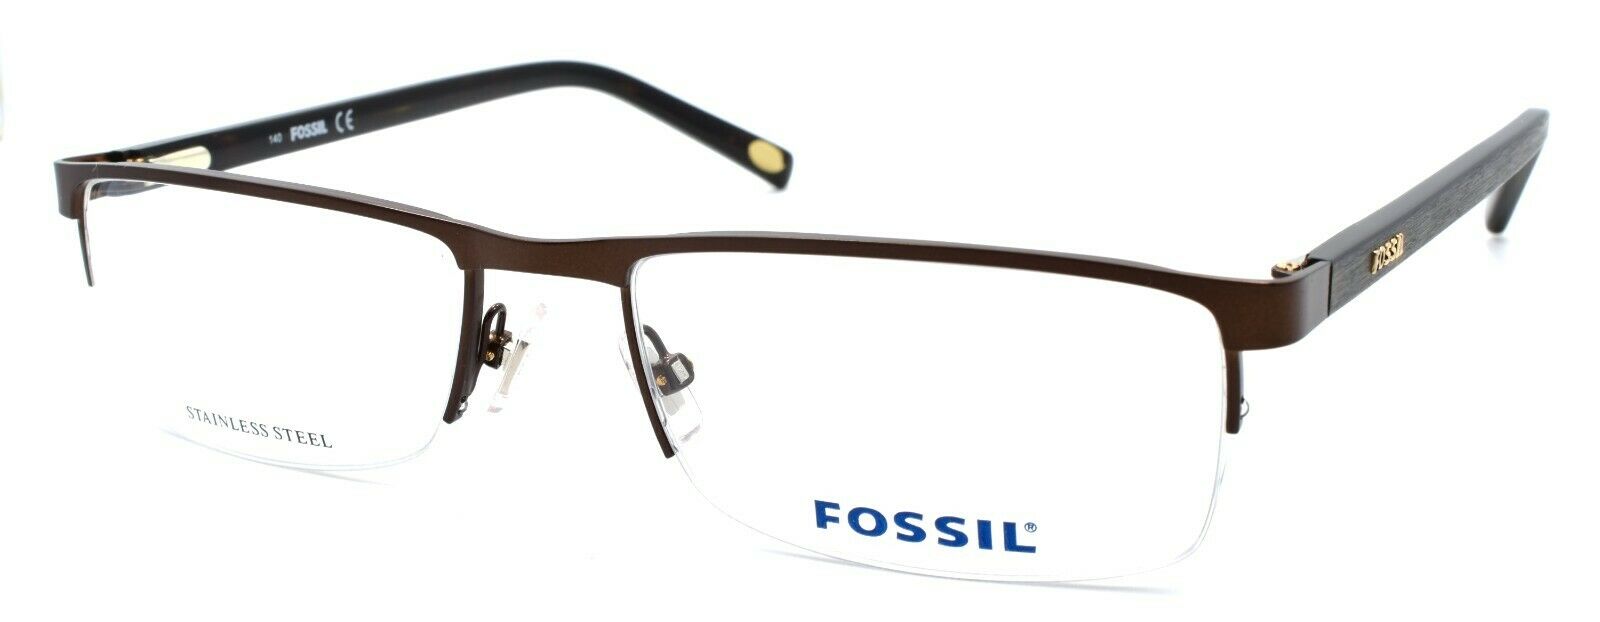 1-Fossil Michael 0JCA Men's Eyeglasses Frames Half-rim 54-18-140 Brown / Bakelite-716737372777-IKSpecs